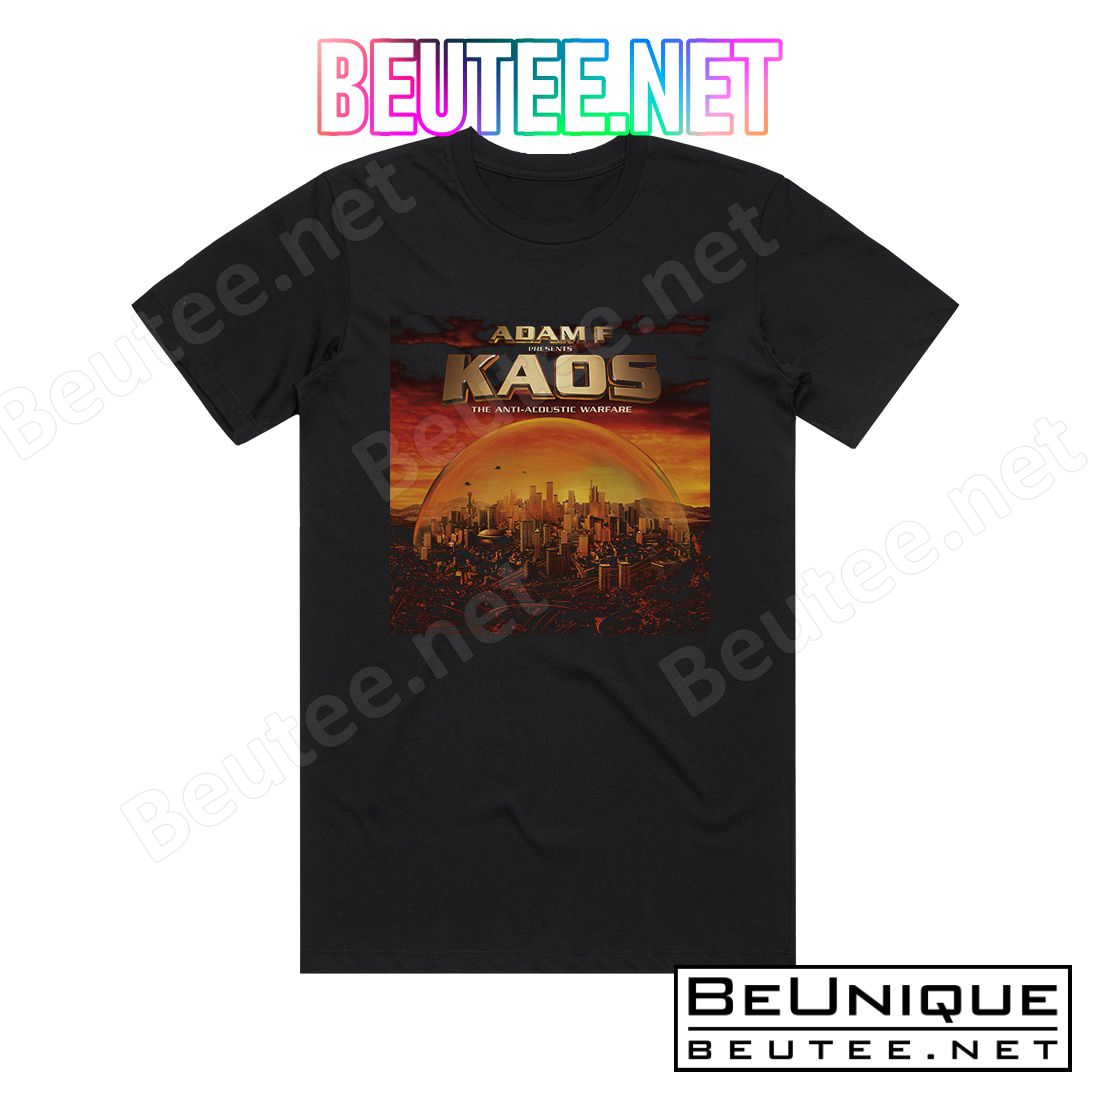 Adam F Kaos The Anti Acoustic Warfare Album Cover T-Shirt